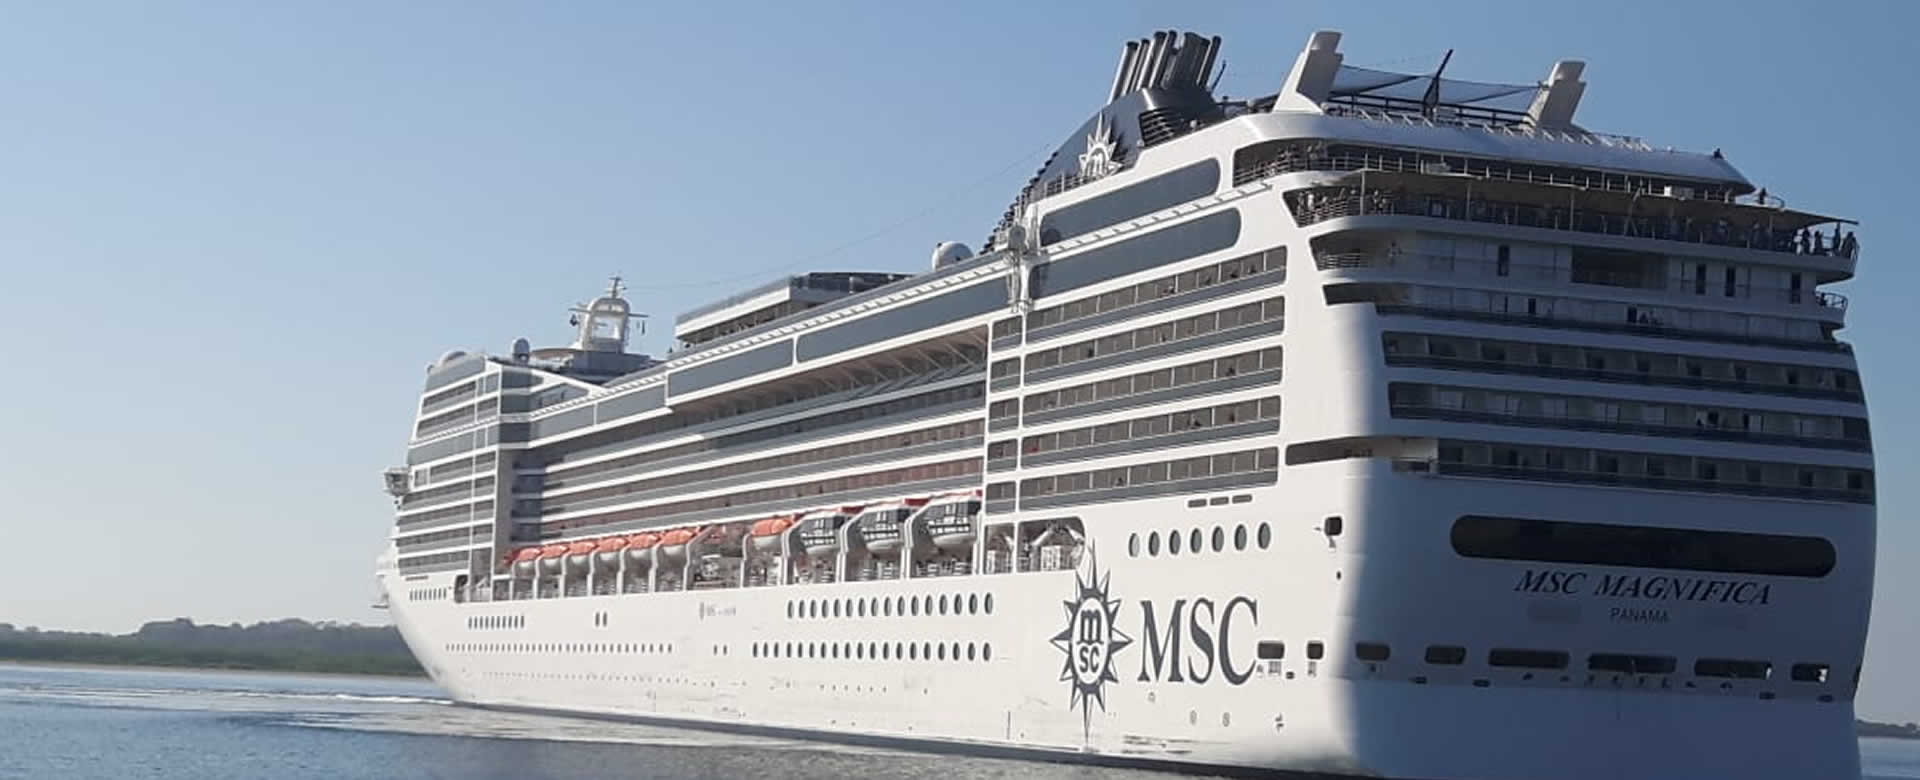 Puerto Corinto registra la primera visita a Nicaragua del Crucero MSC